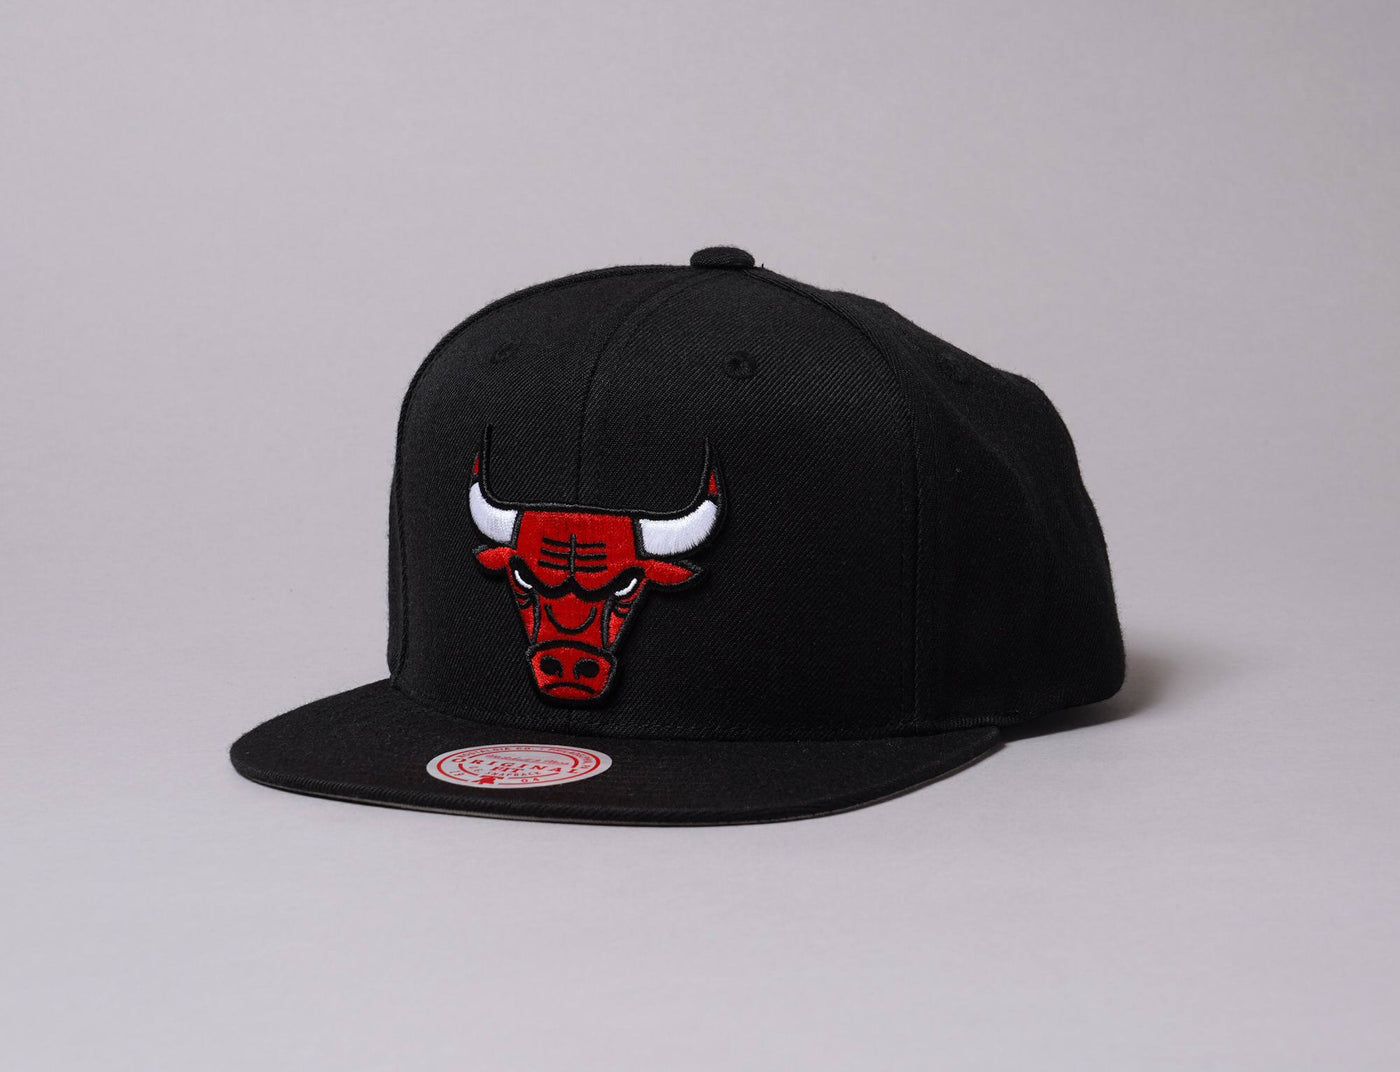 Cap Snapback Cap Snapback NBA Wool Solid Snapback Chicago Bulls Black Mitchell & Ness Snapback Cap / Black / One Size